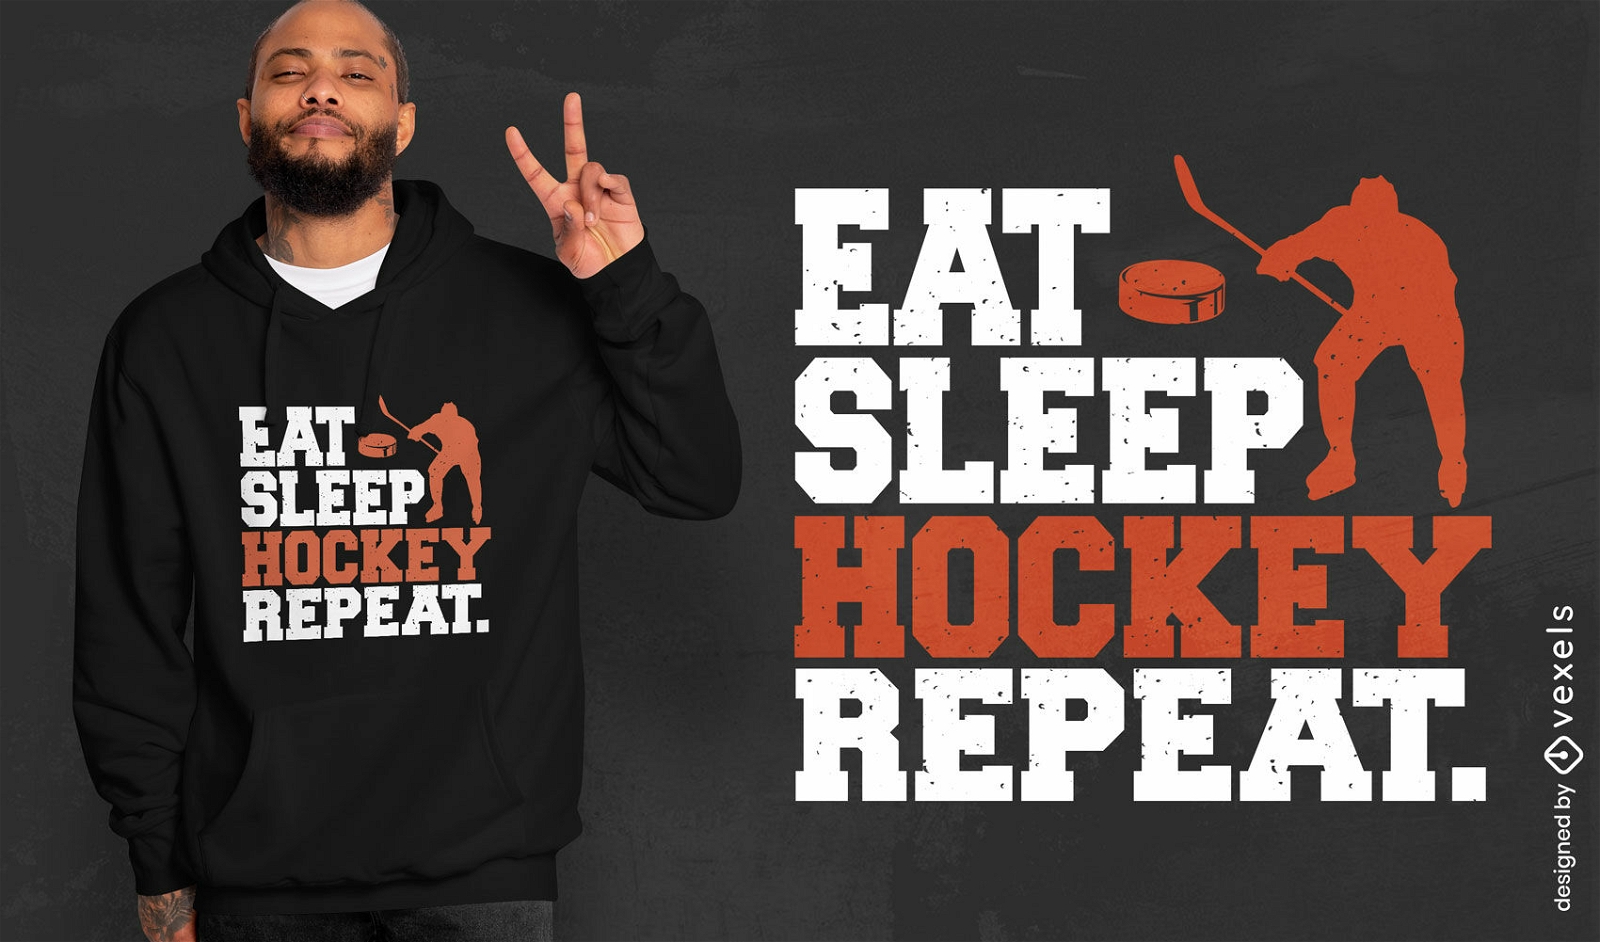 Hockey routine quote t-shirt design